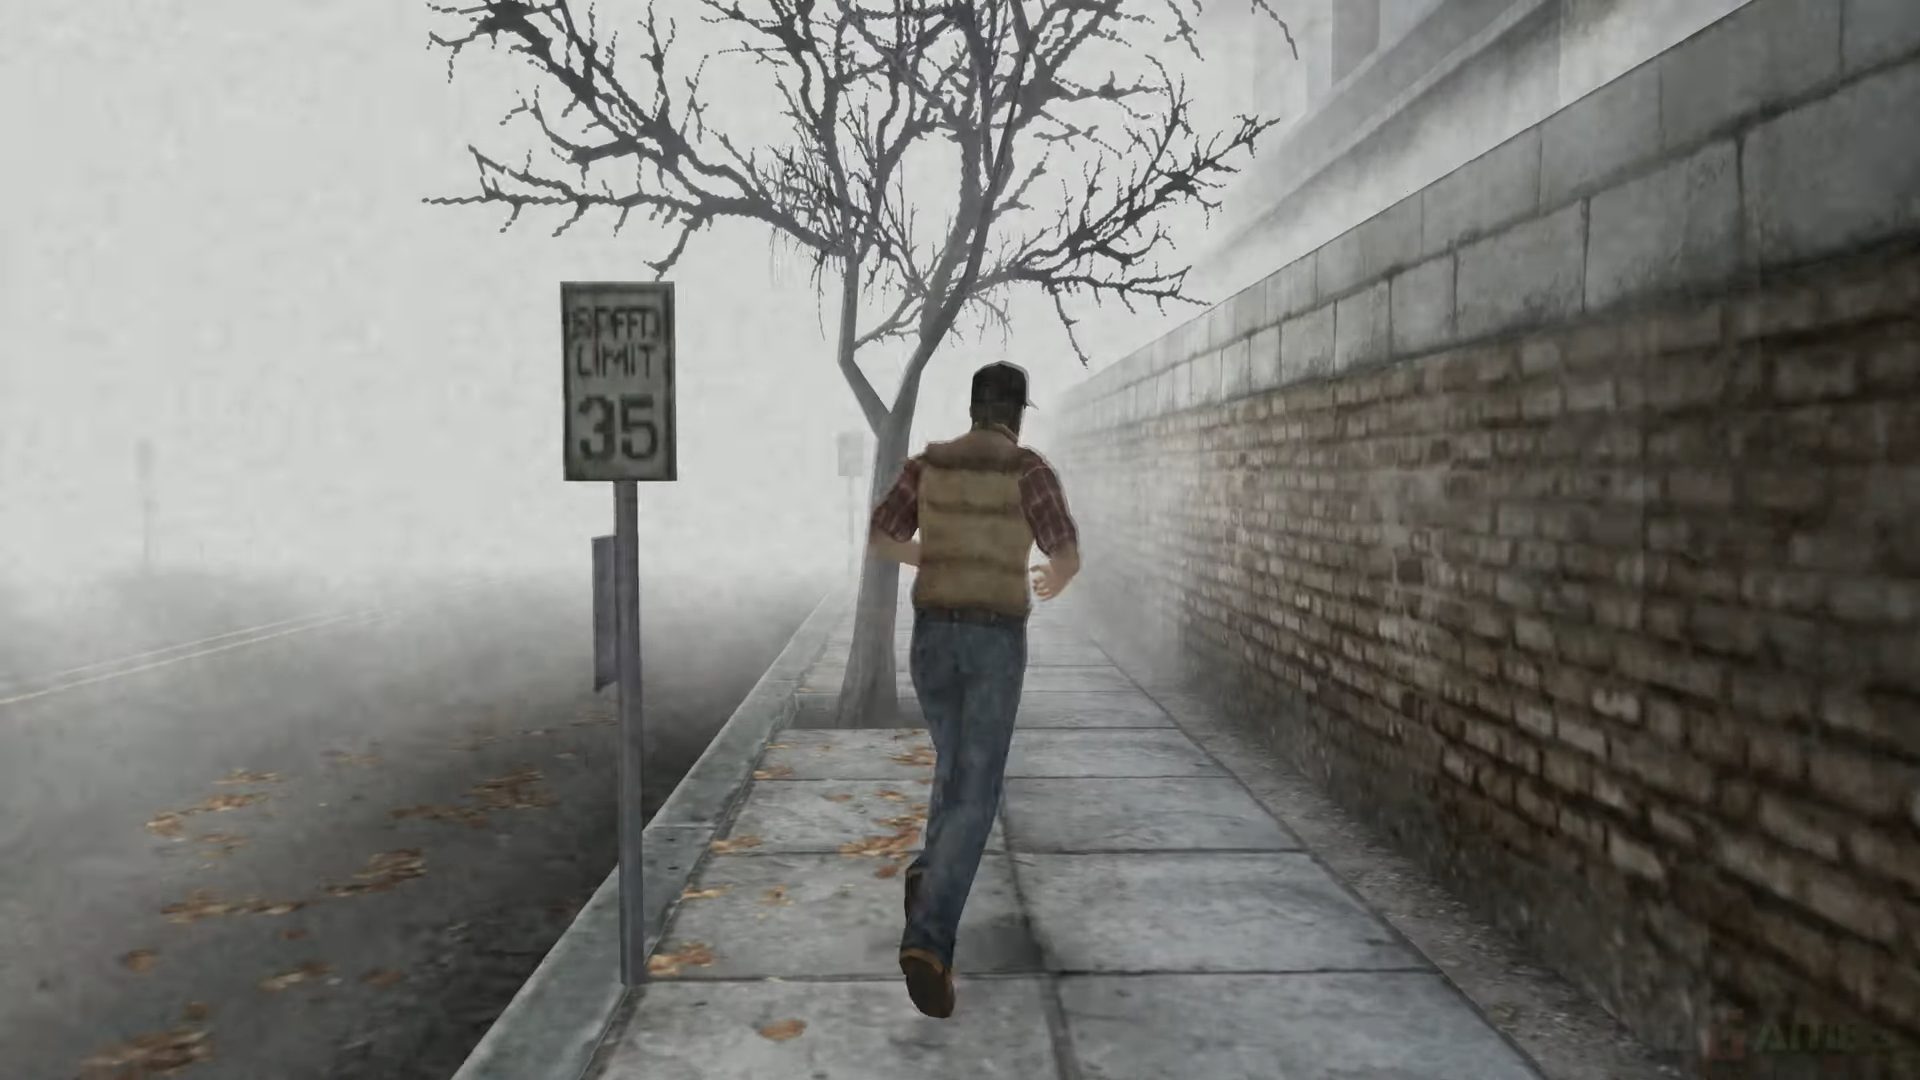 Silent Hill: Shattered Memories - PSP Gameplay 4k 2160p (PPSSPP